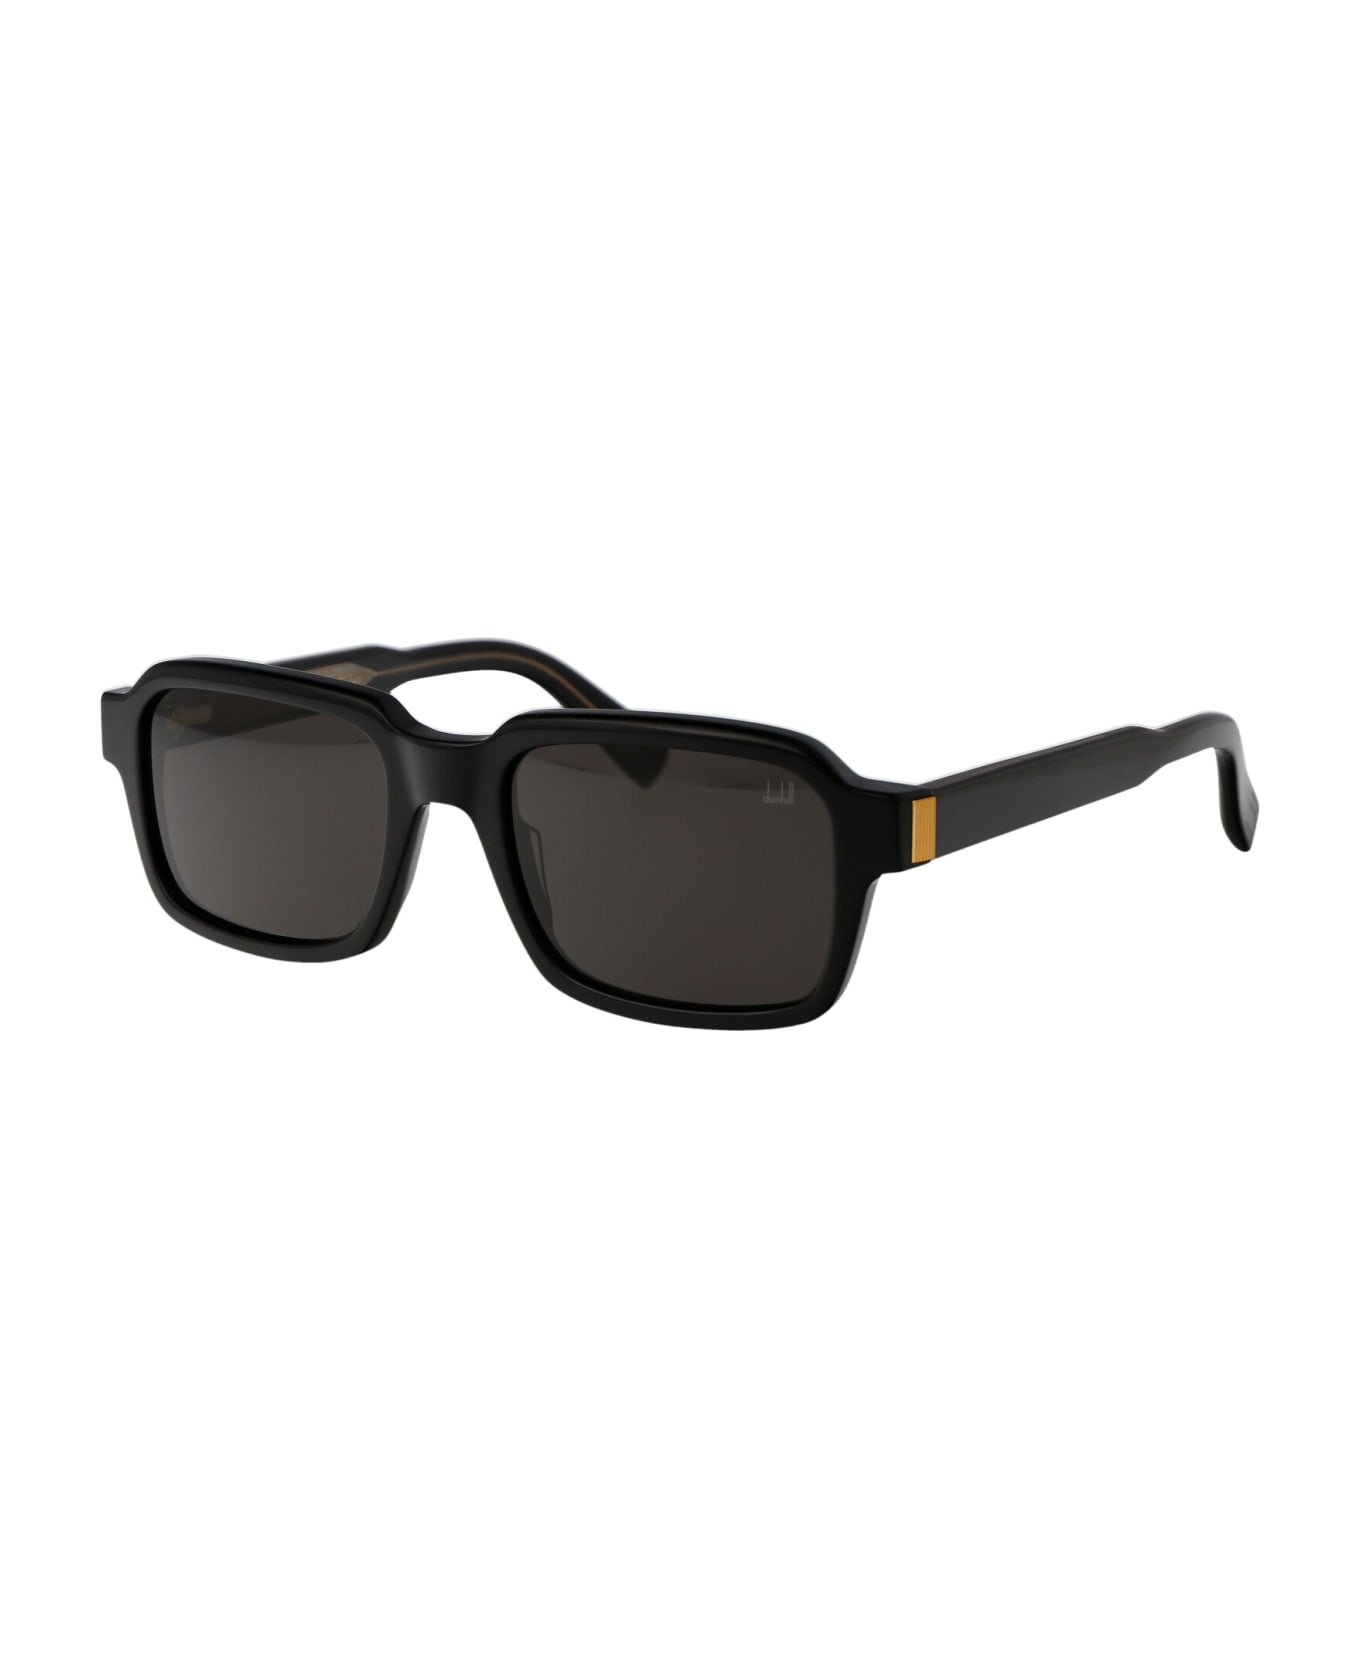 Dunhill Du0057s Sunglasses - 001 BLACK BLACK GREY